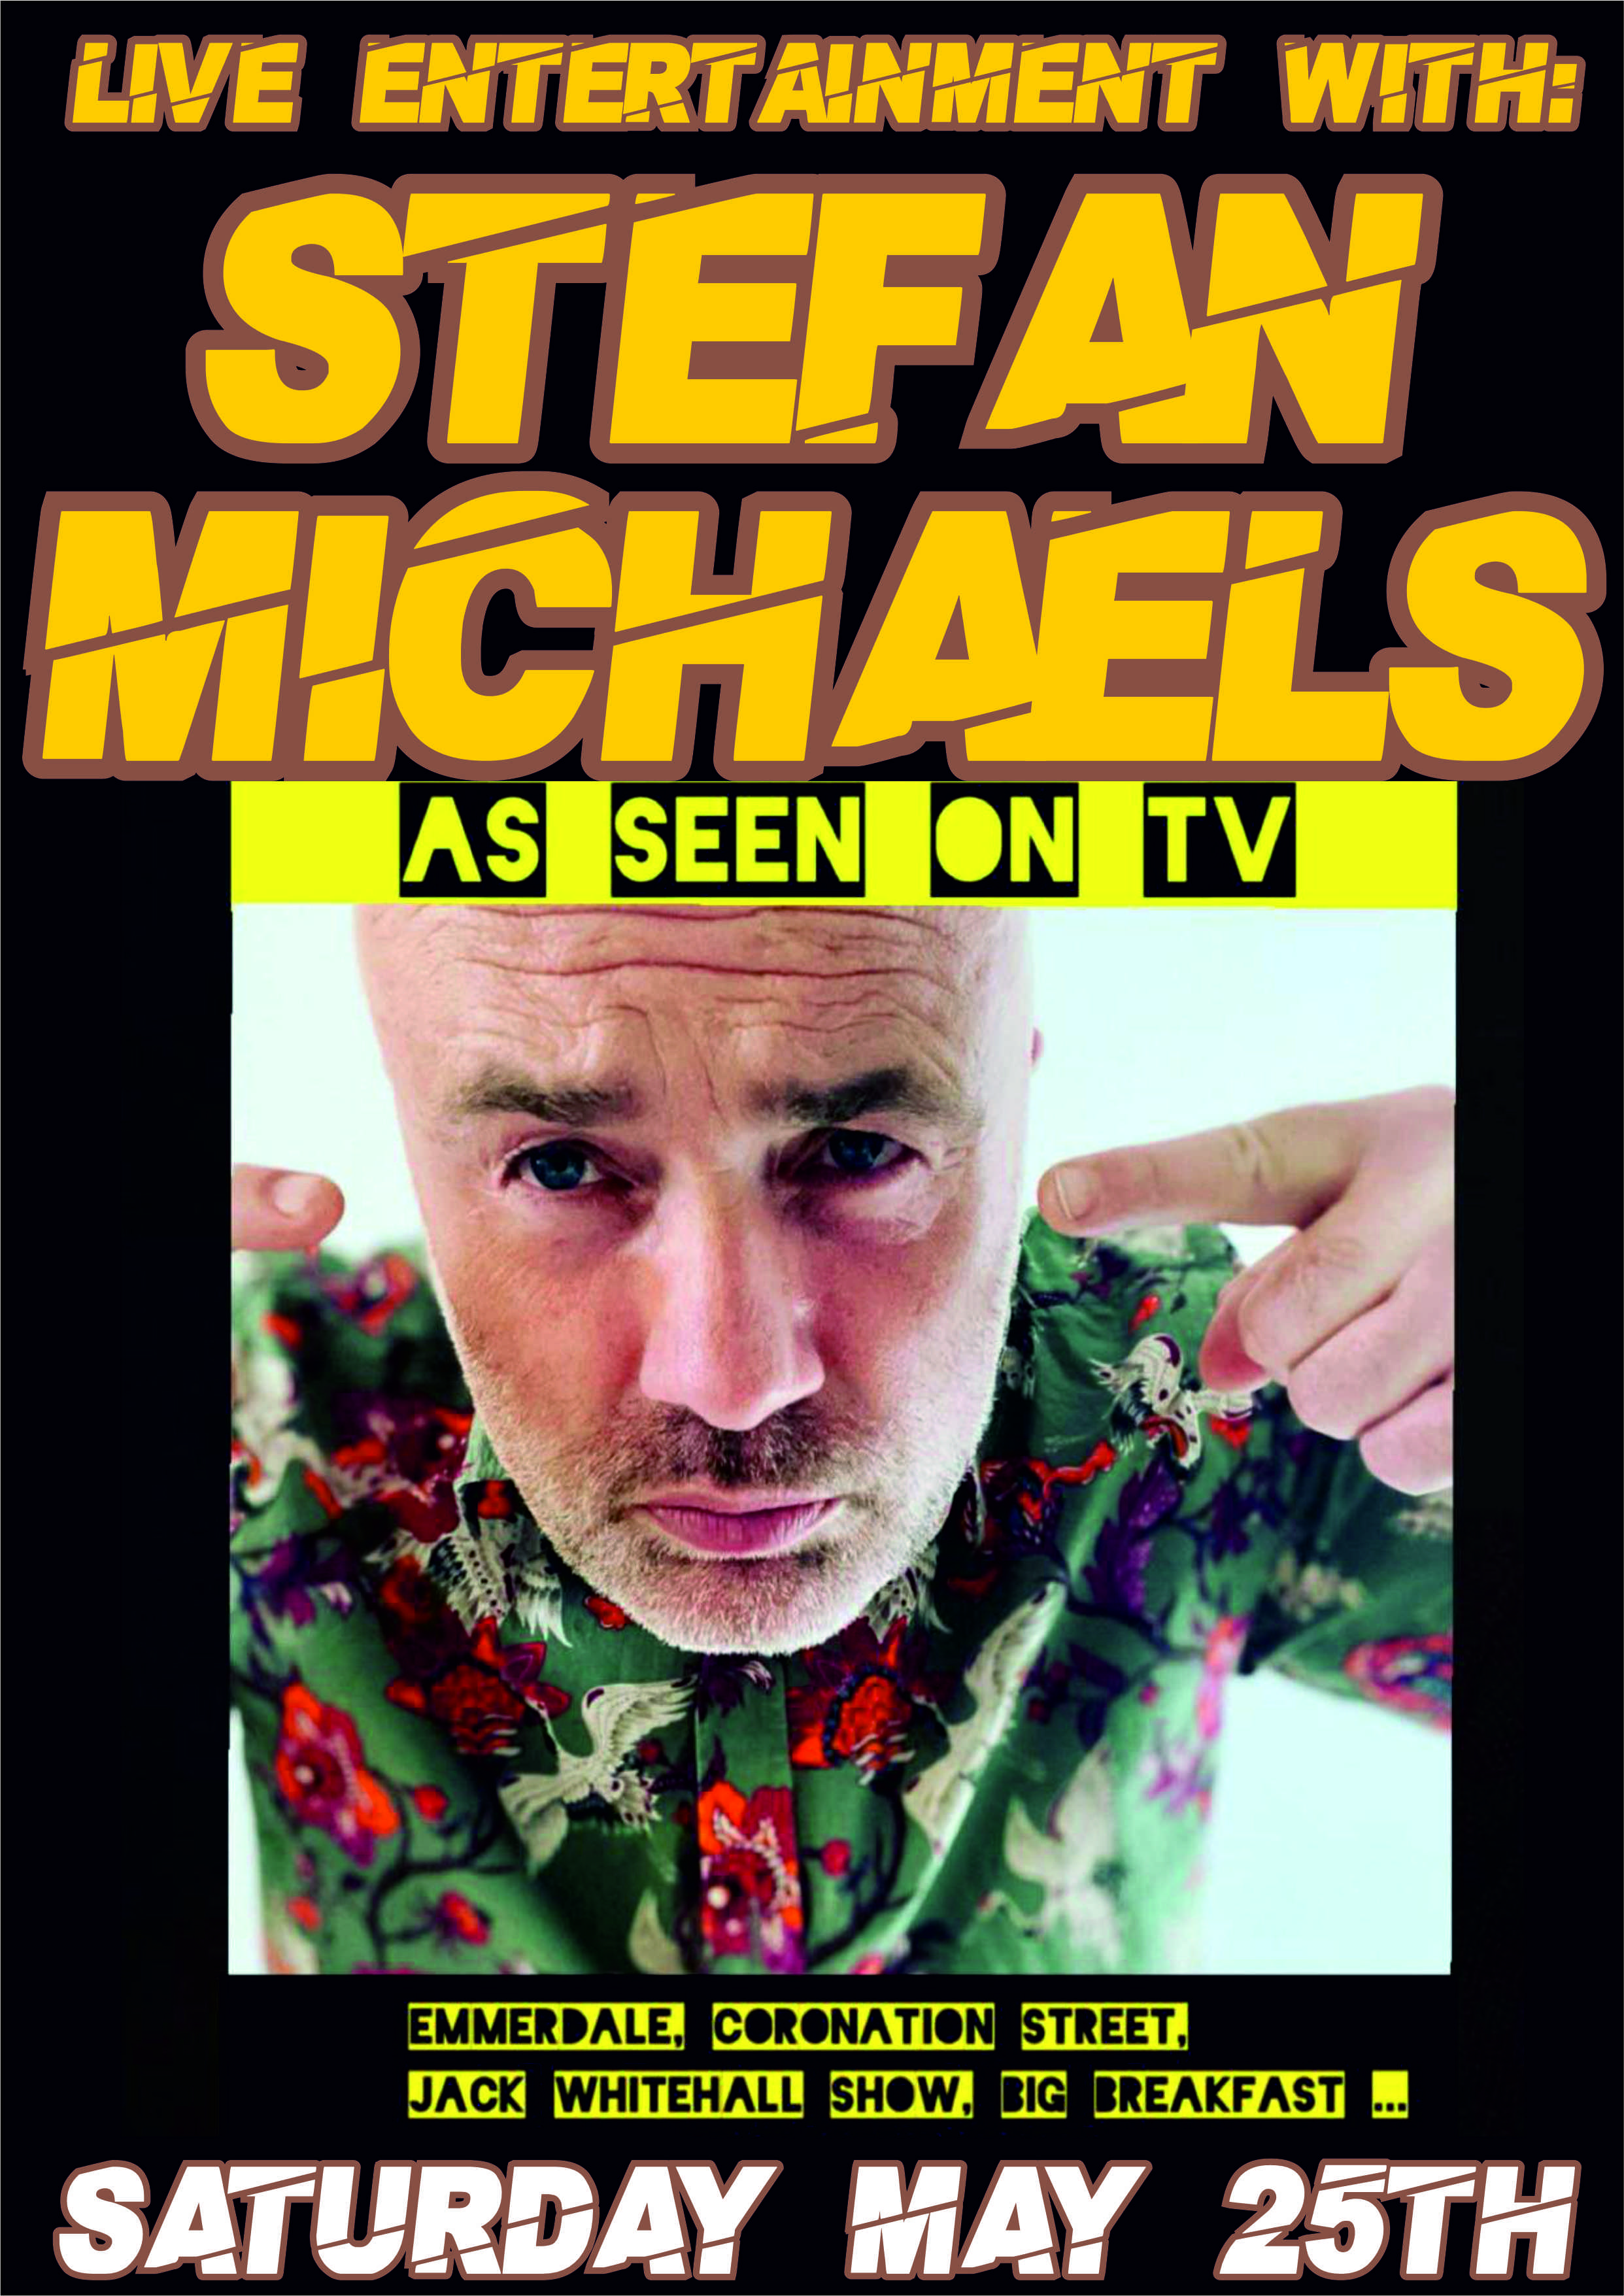 Live Entertainment with Stefan Michaels